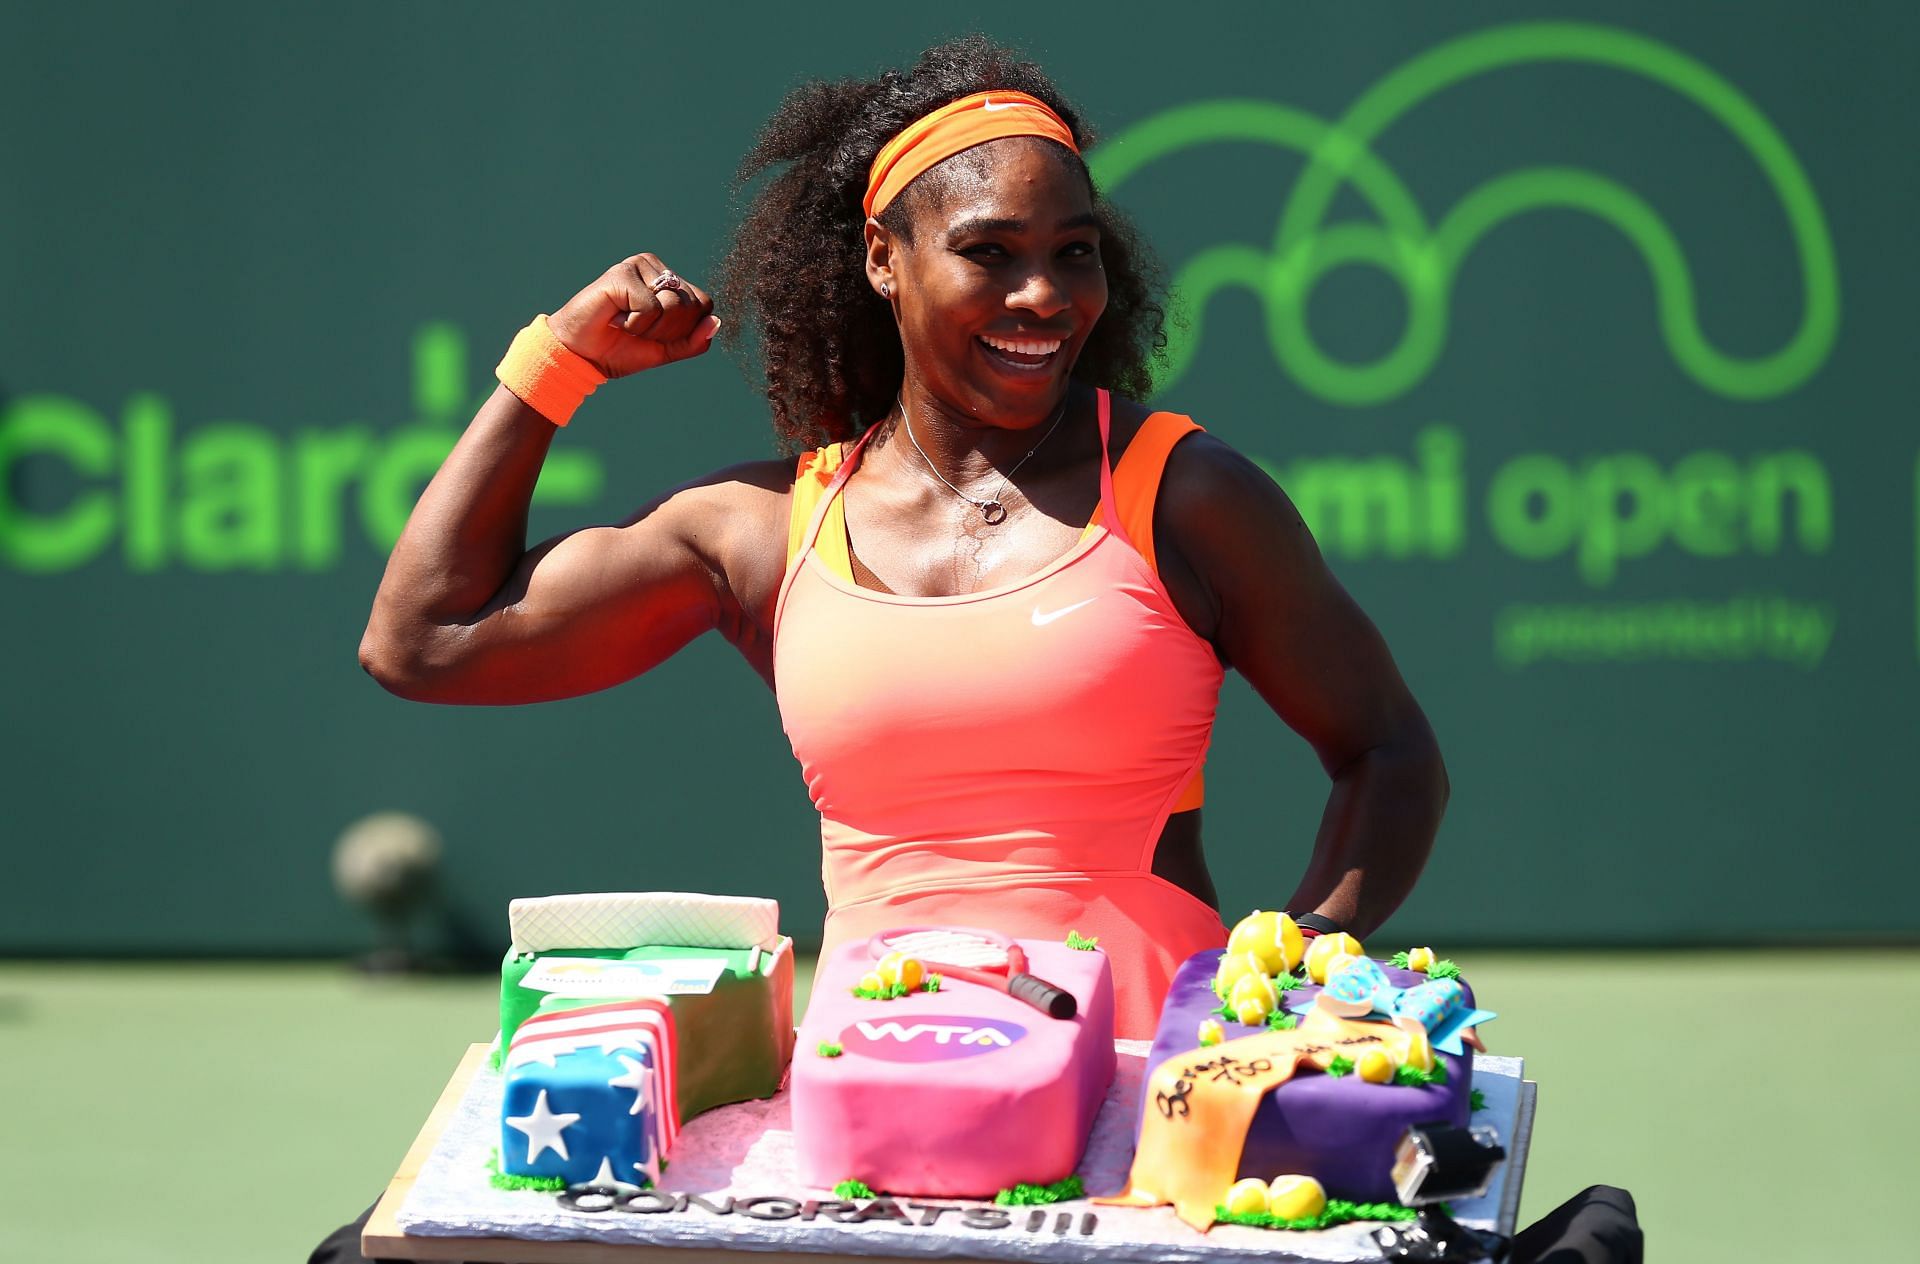 Serena Williams at the Miami Open Tennis - Day 10